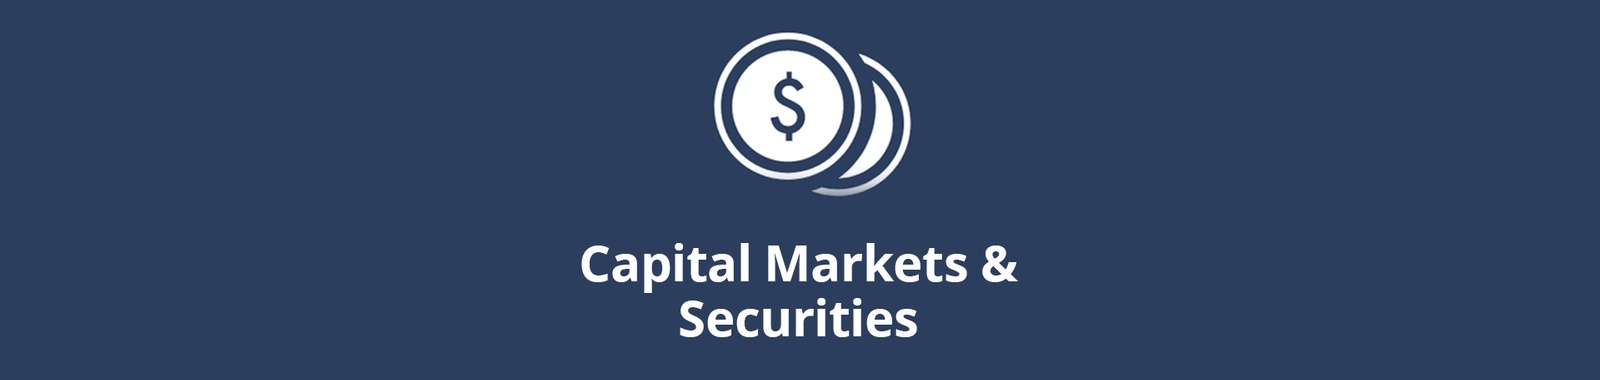 Capital Markets & Securities